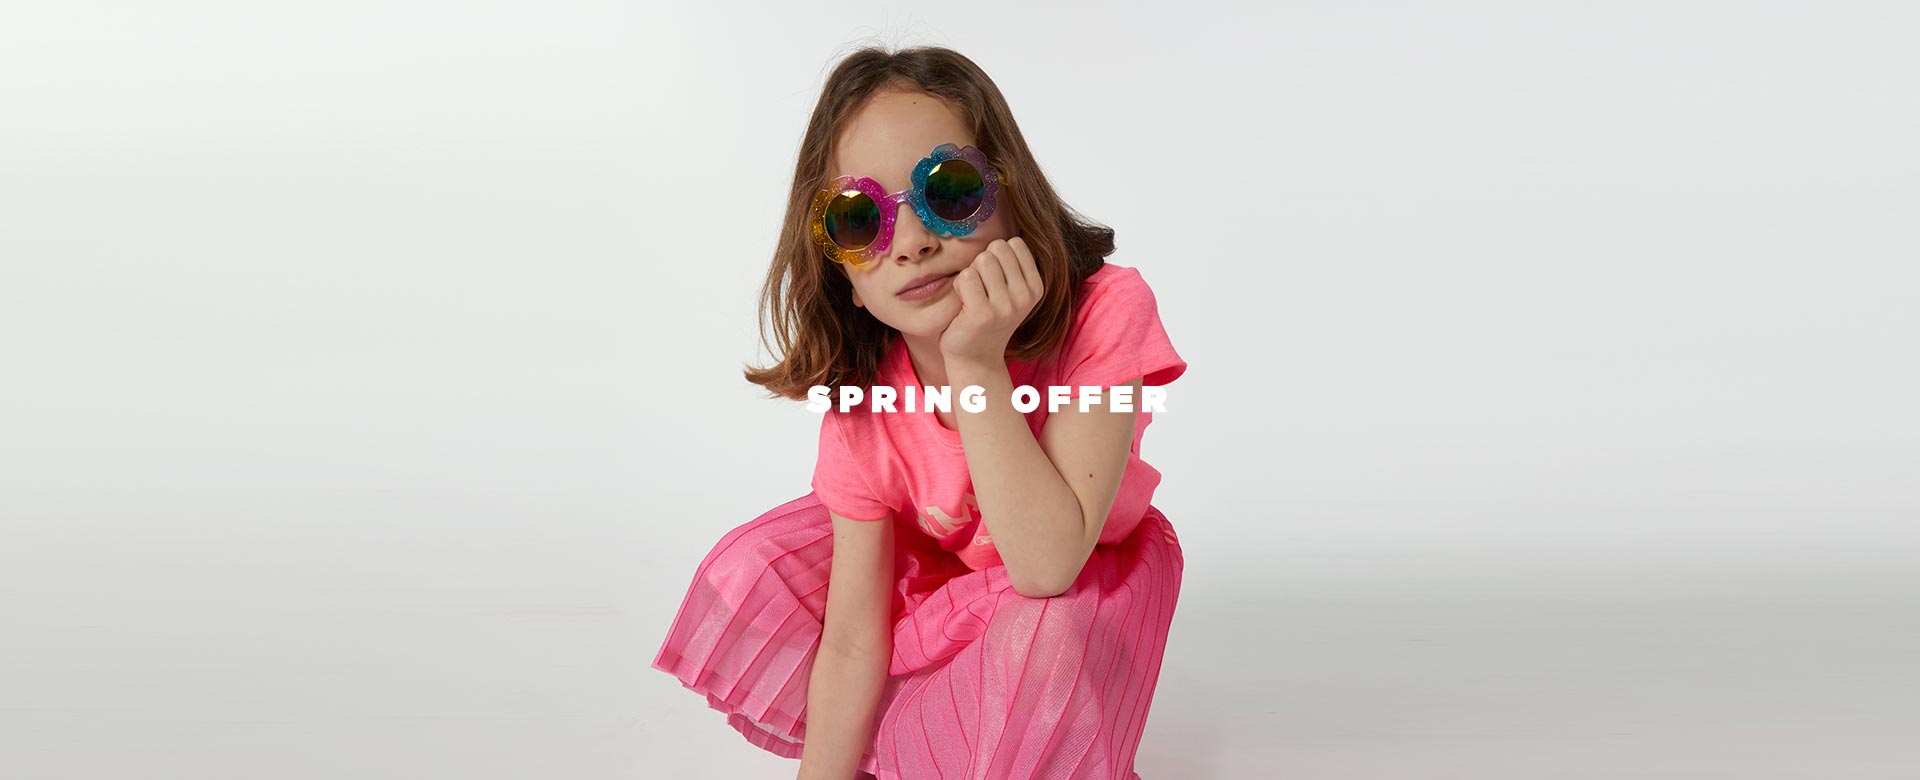 spring offer for boys and girls